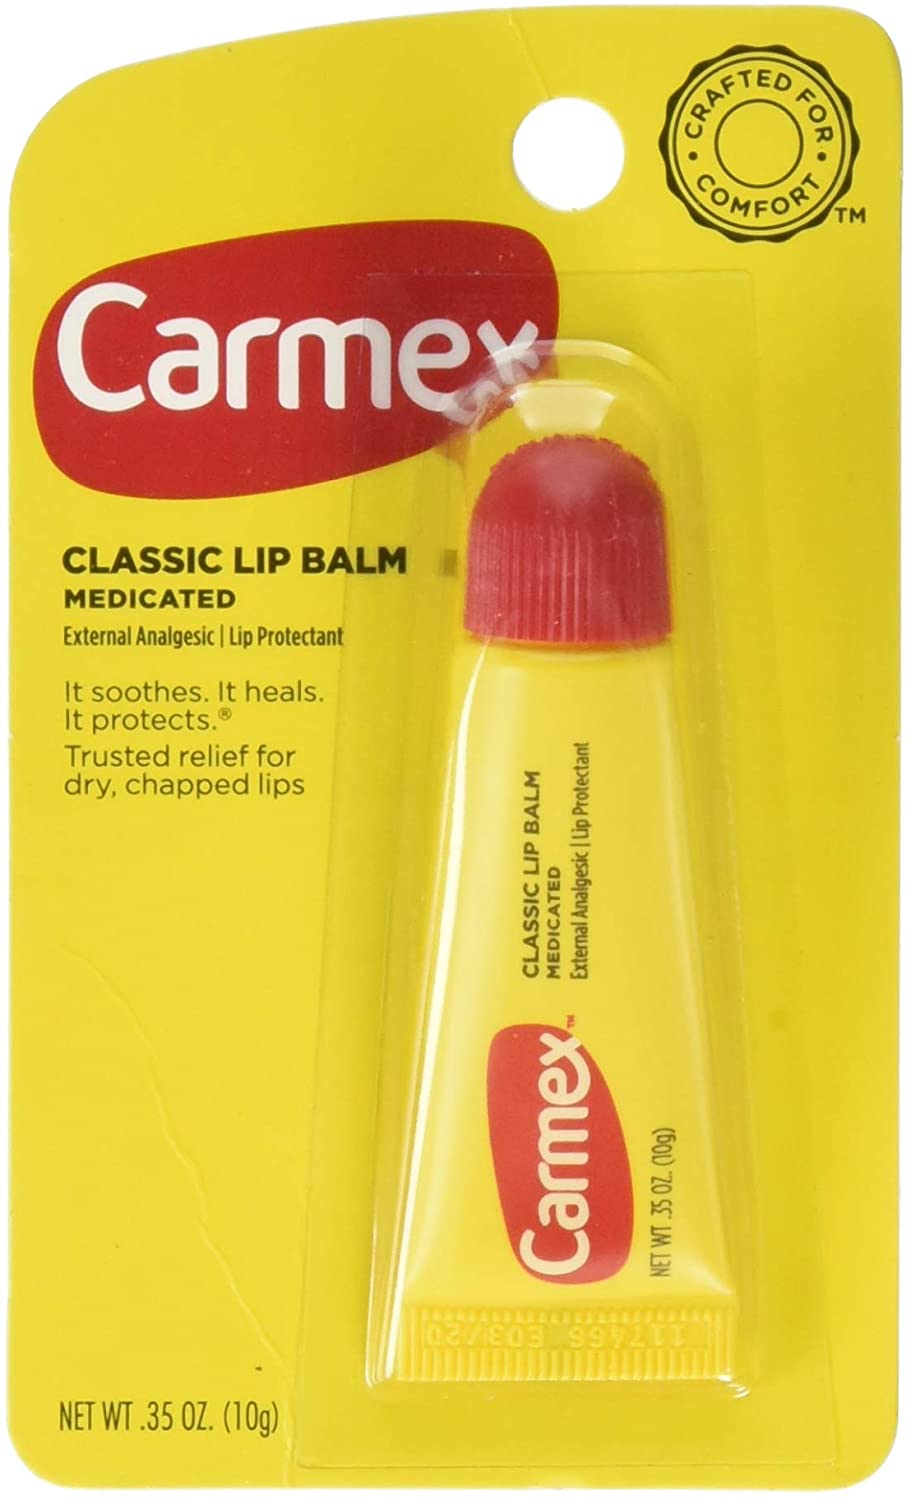 Carmex Medicated Lip Balm